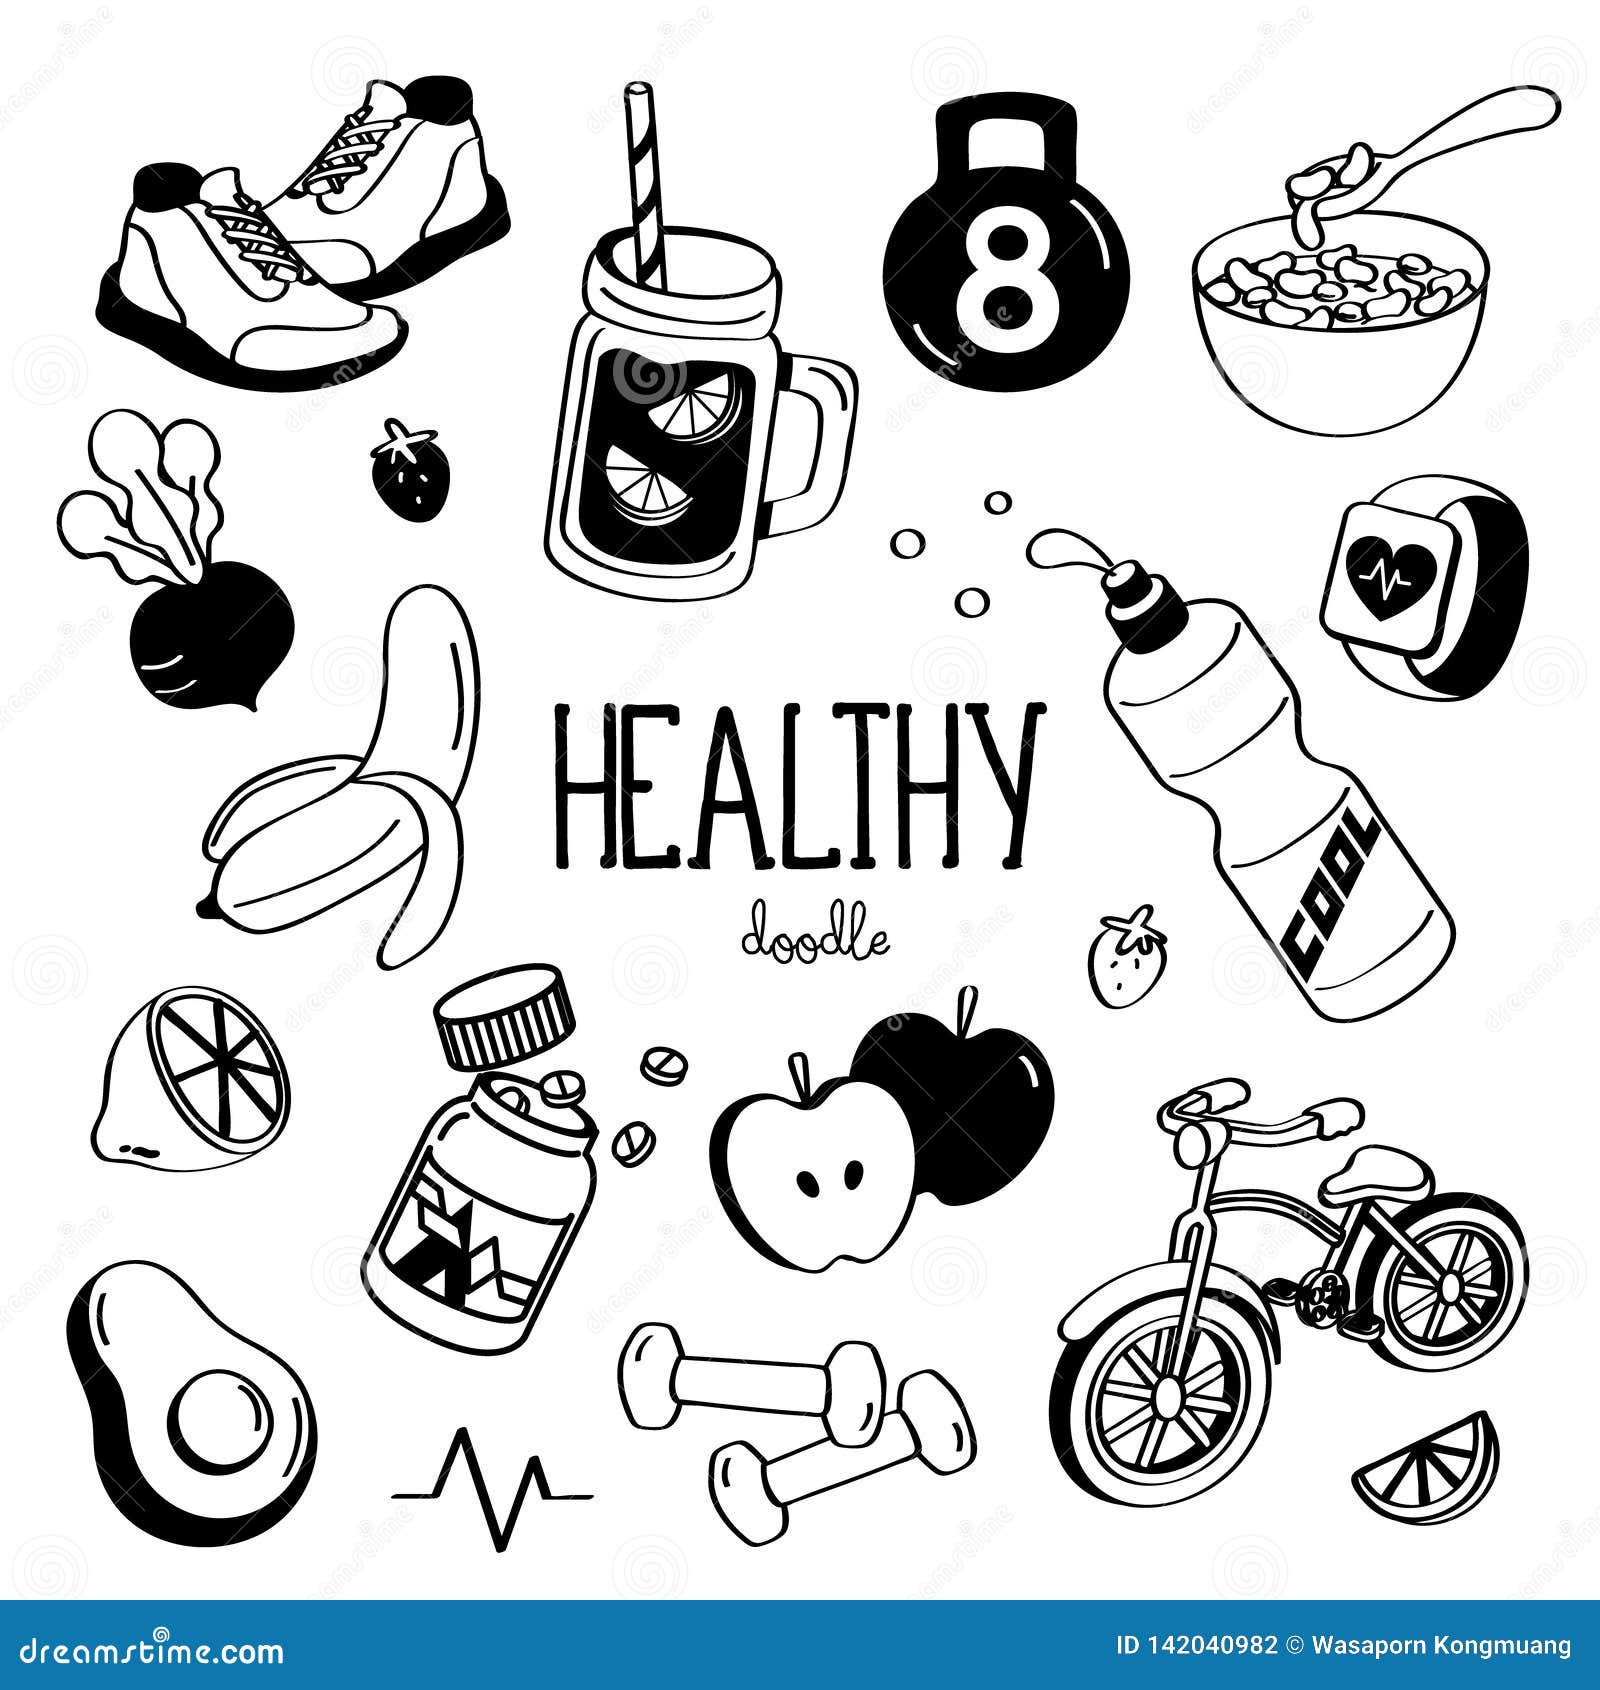 Food Items | Healthy and unhealthy food, Food items, Dental health preschool